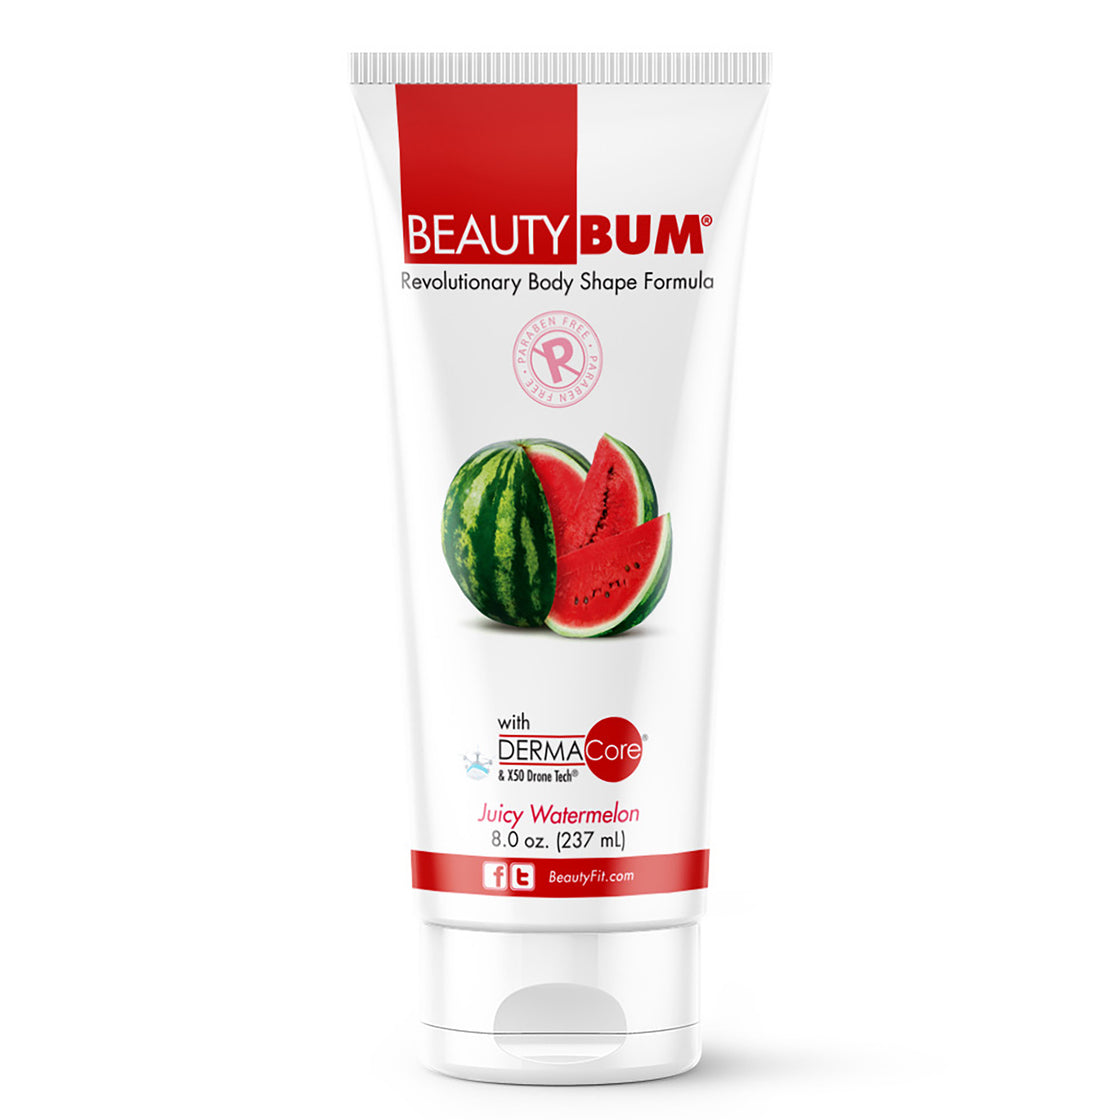 BeautyBum Anti Cellulite Cream - Juicy Watermelon by BeautyFit for Women - 8 oz Cream